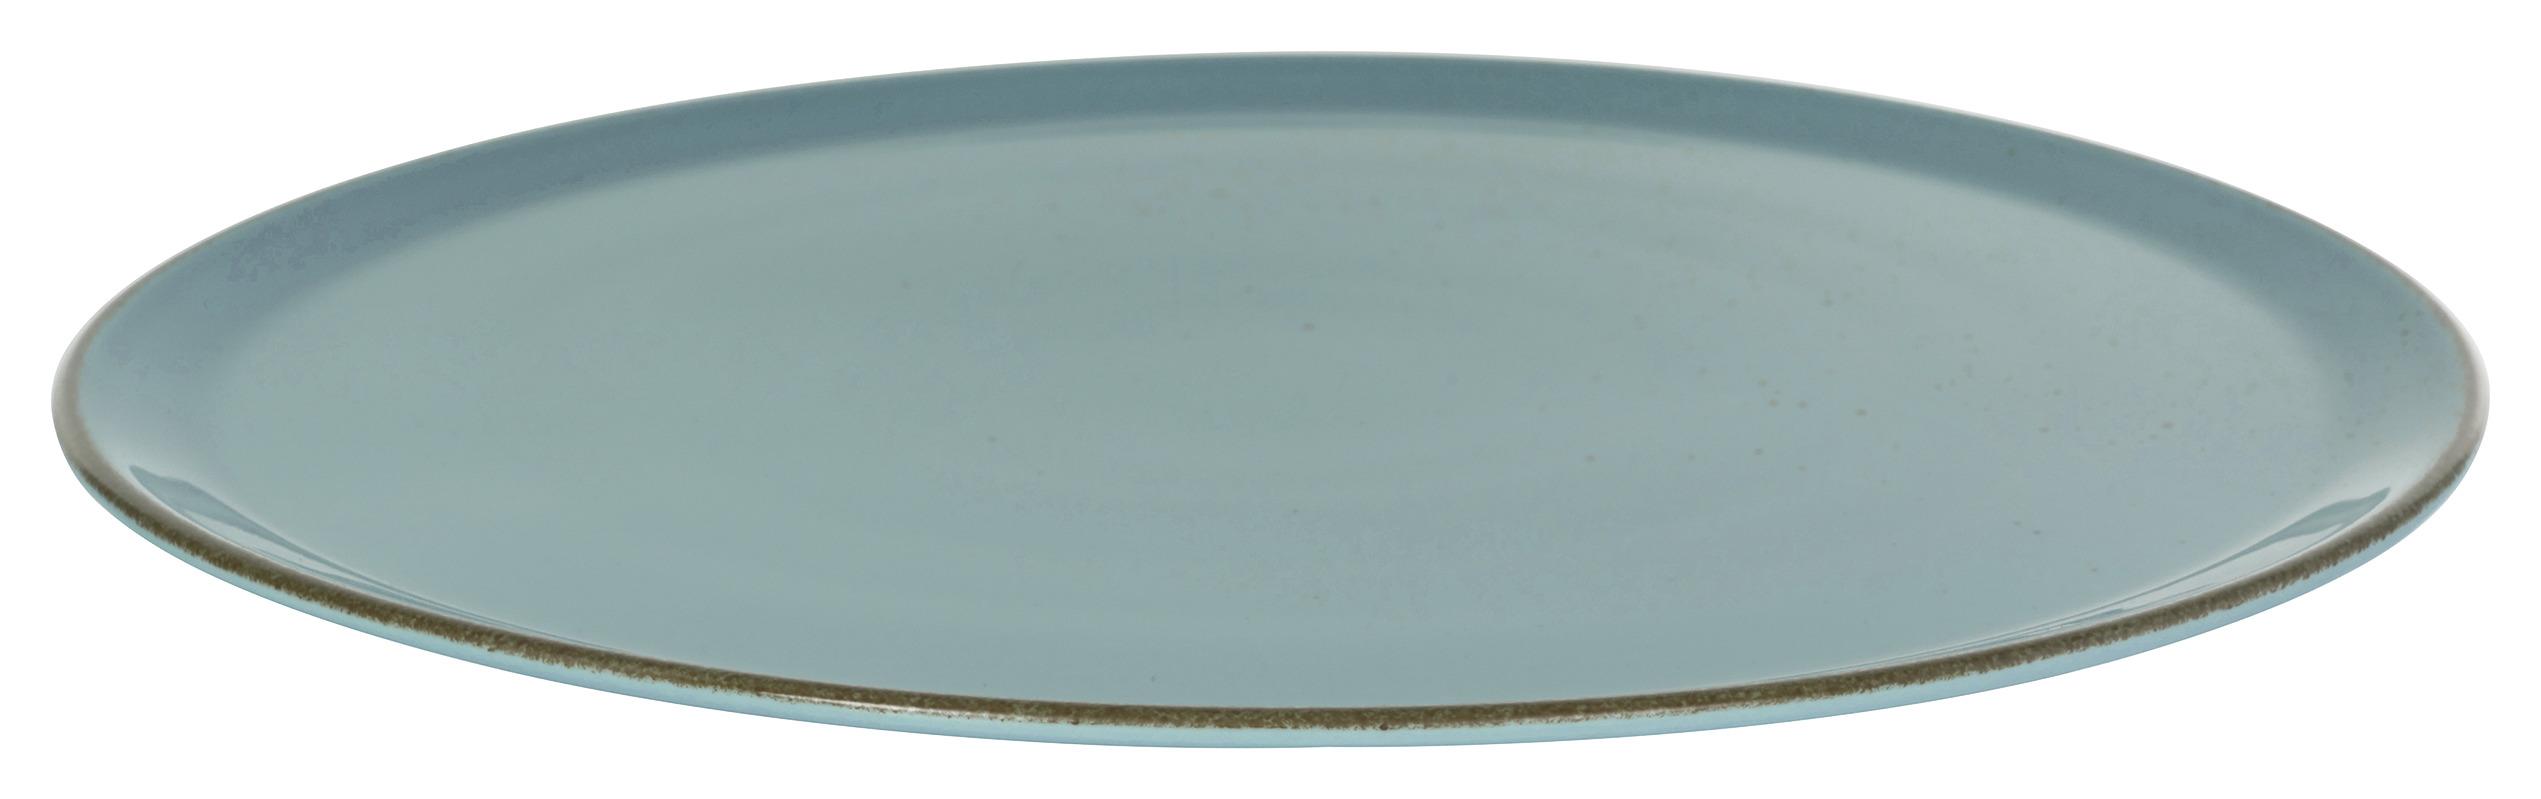 Farfurie pentru pizza Capri - verde, Modern, ceramică (33/33/2cm) - Premium Living